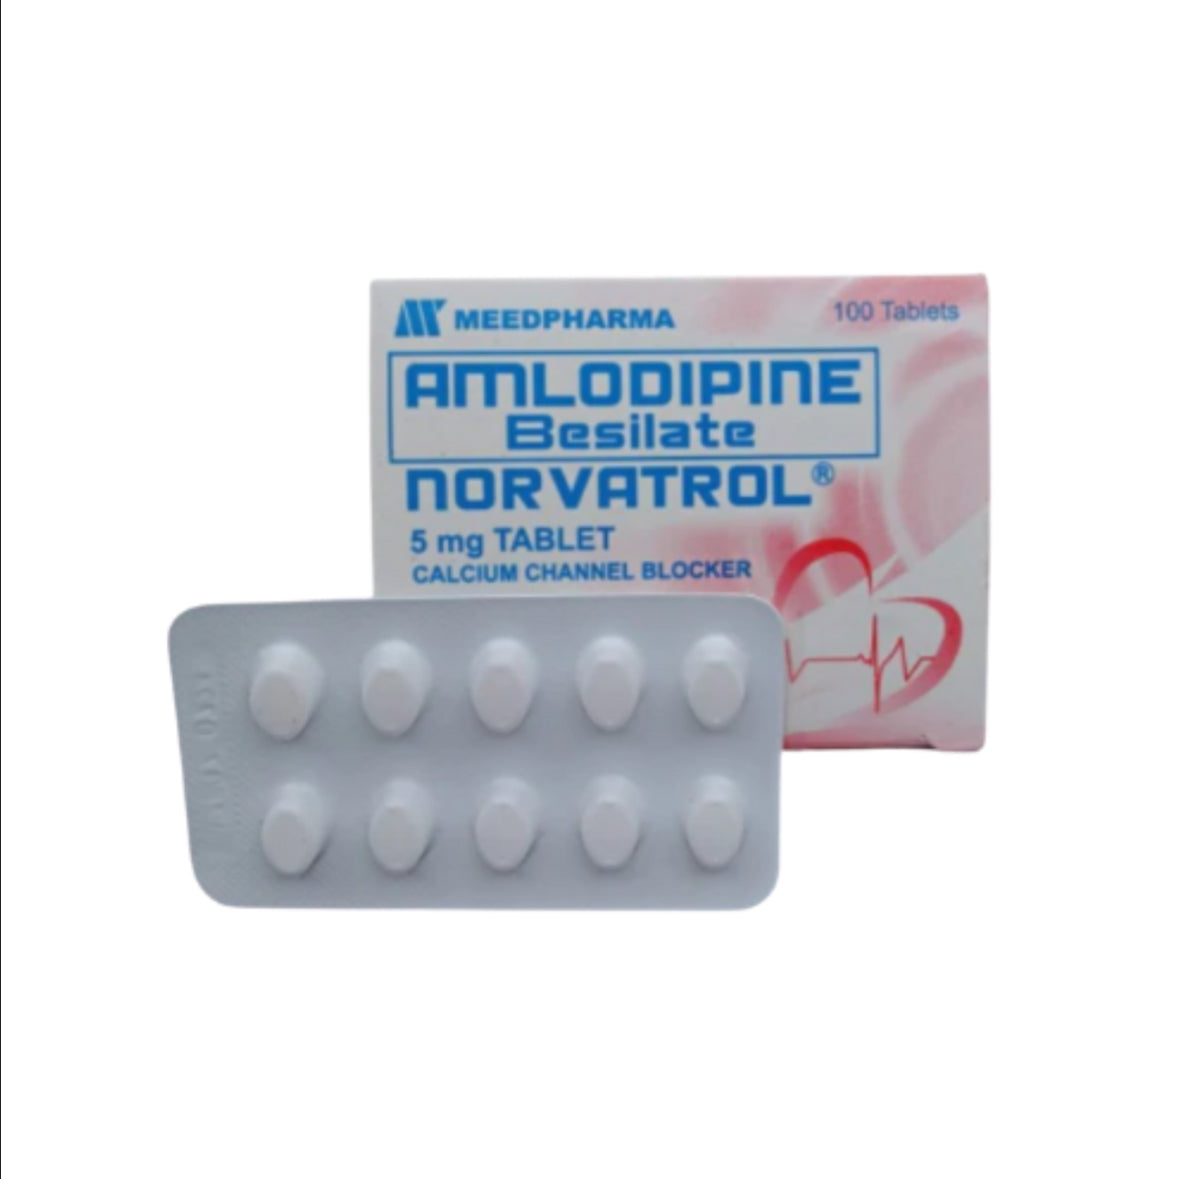 Aforbes (Amlodipine) 5mg Tablet x 1 - XalMeds